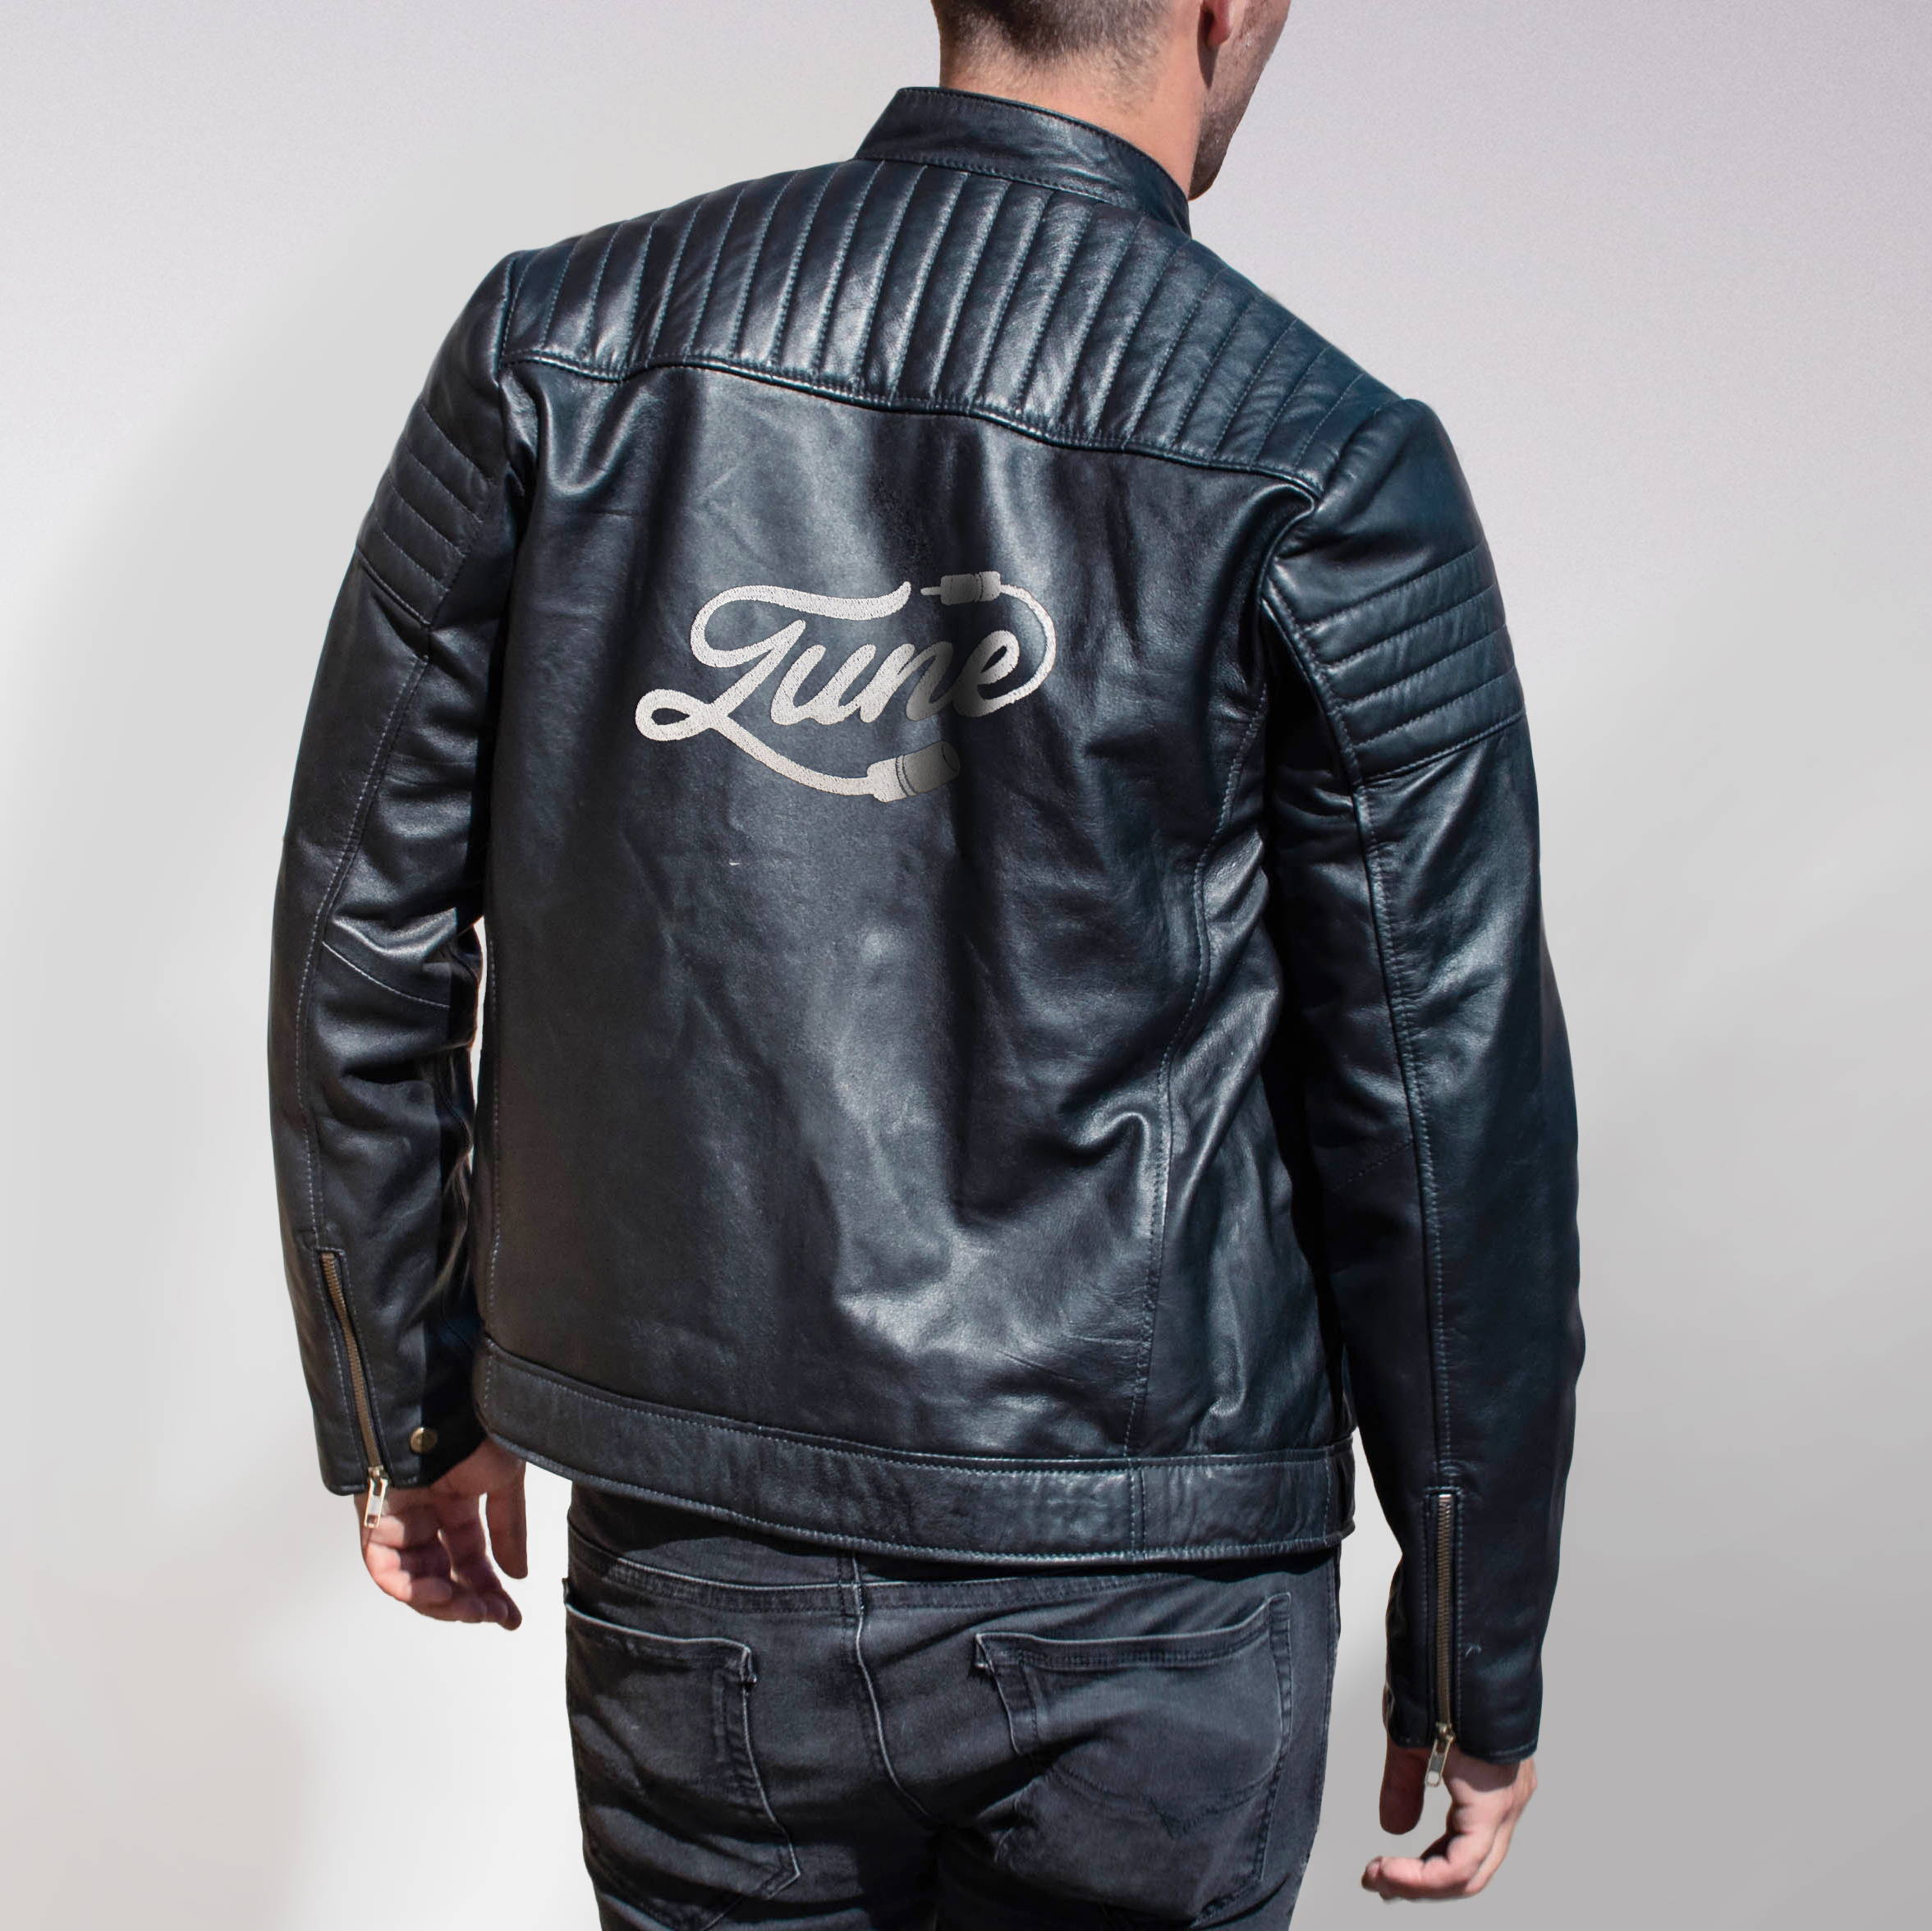 Branded Leather Jackets  - MAHI Leather